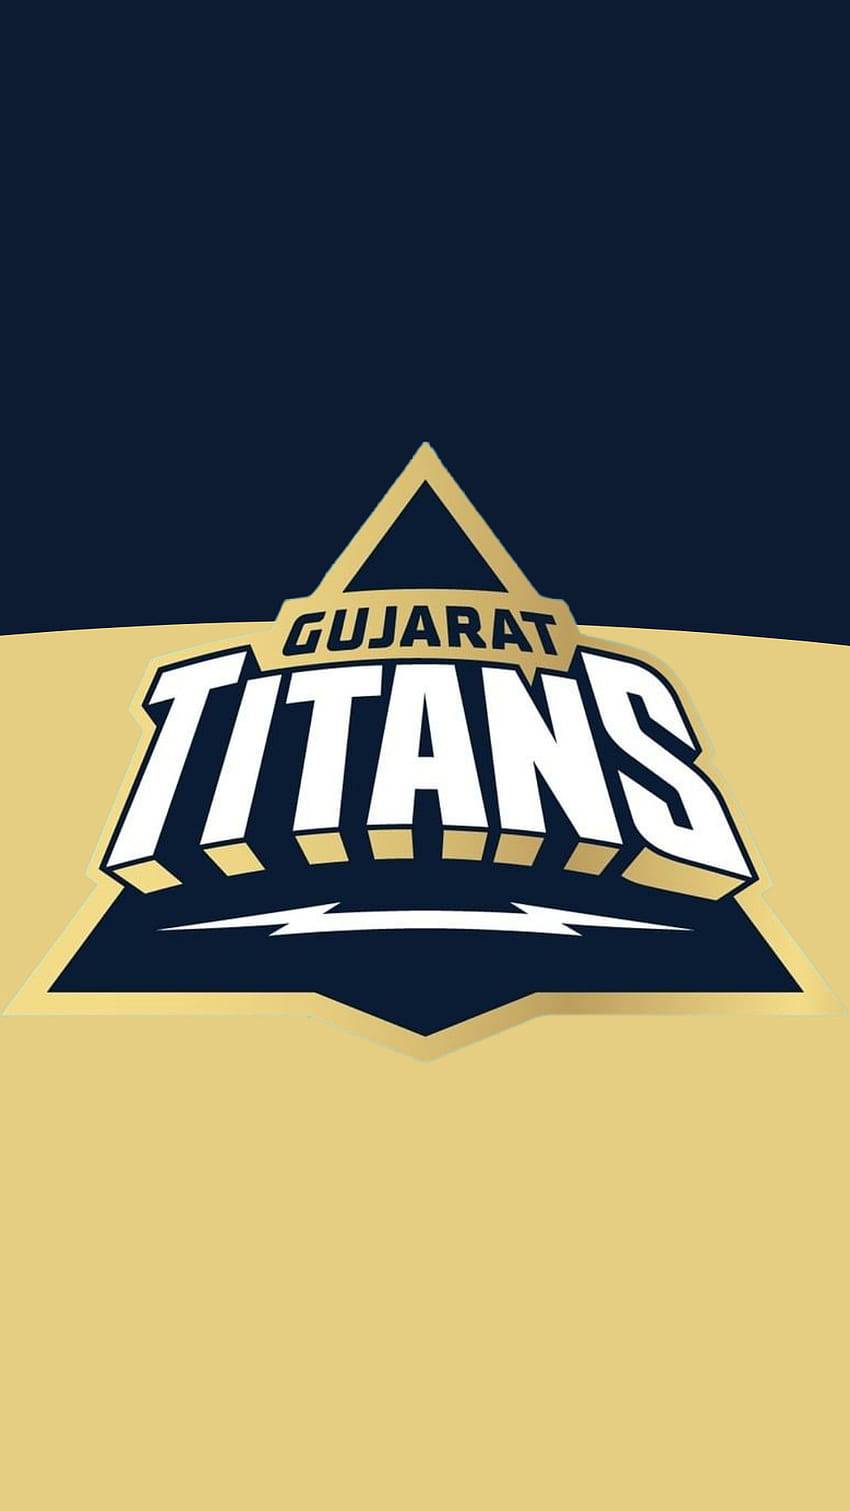 Gujarat Titans, ipl, deportes, cricket fondo de pantalla del teléfono